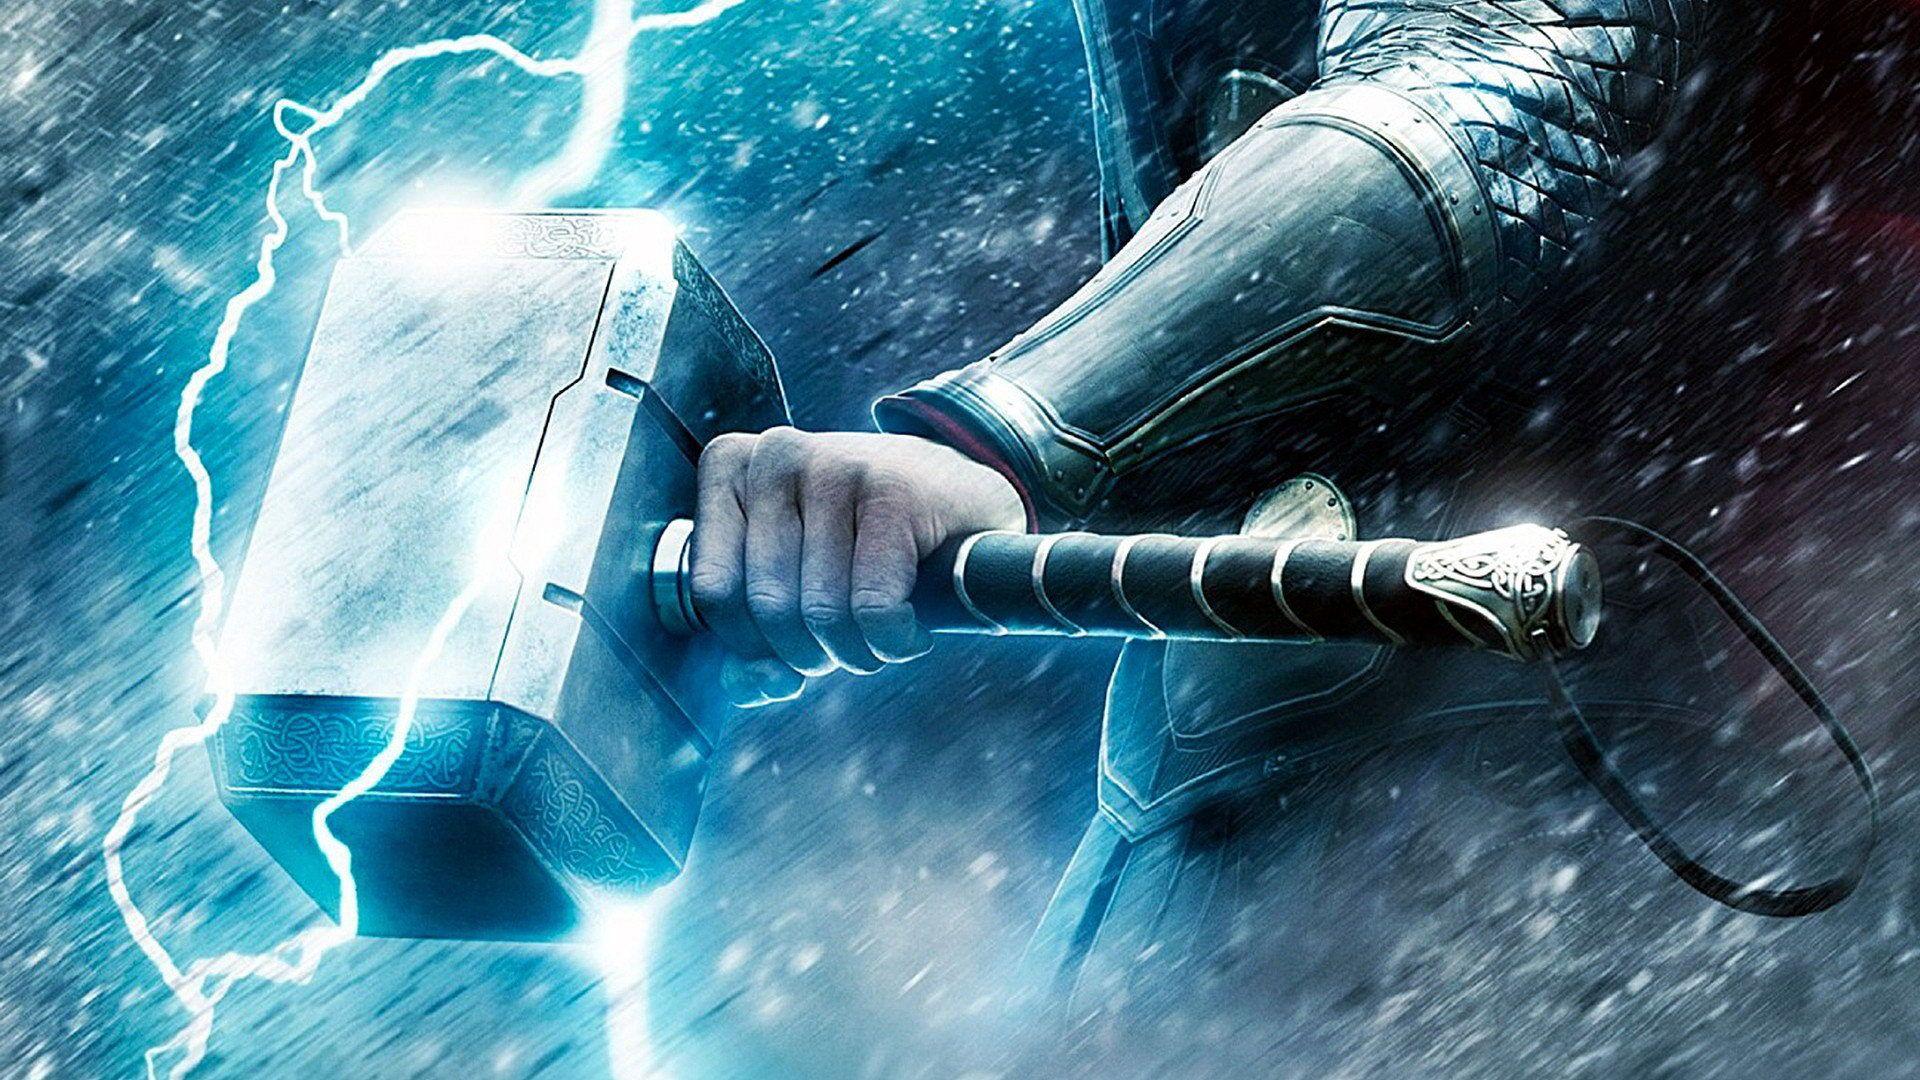 Thor God Of Thunder By Superman On Wallpaper Wp68010667